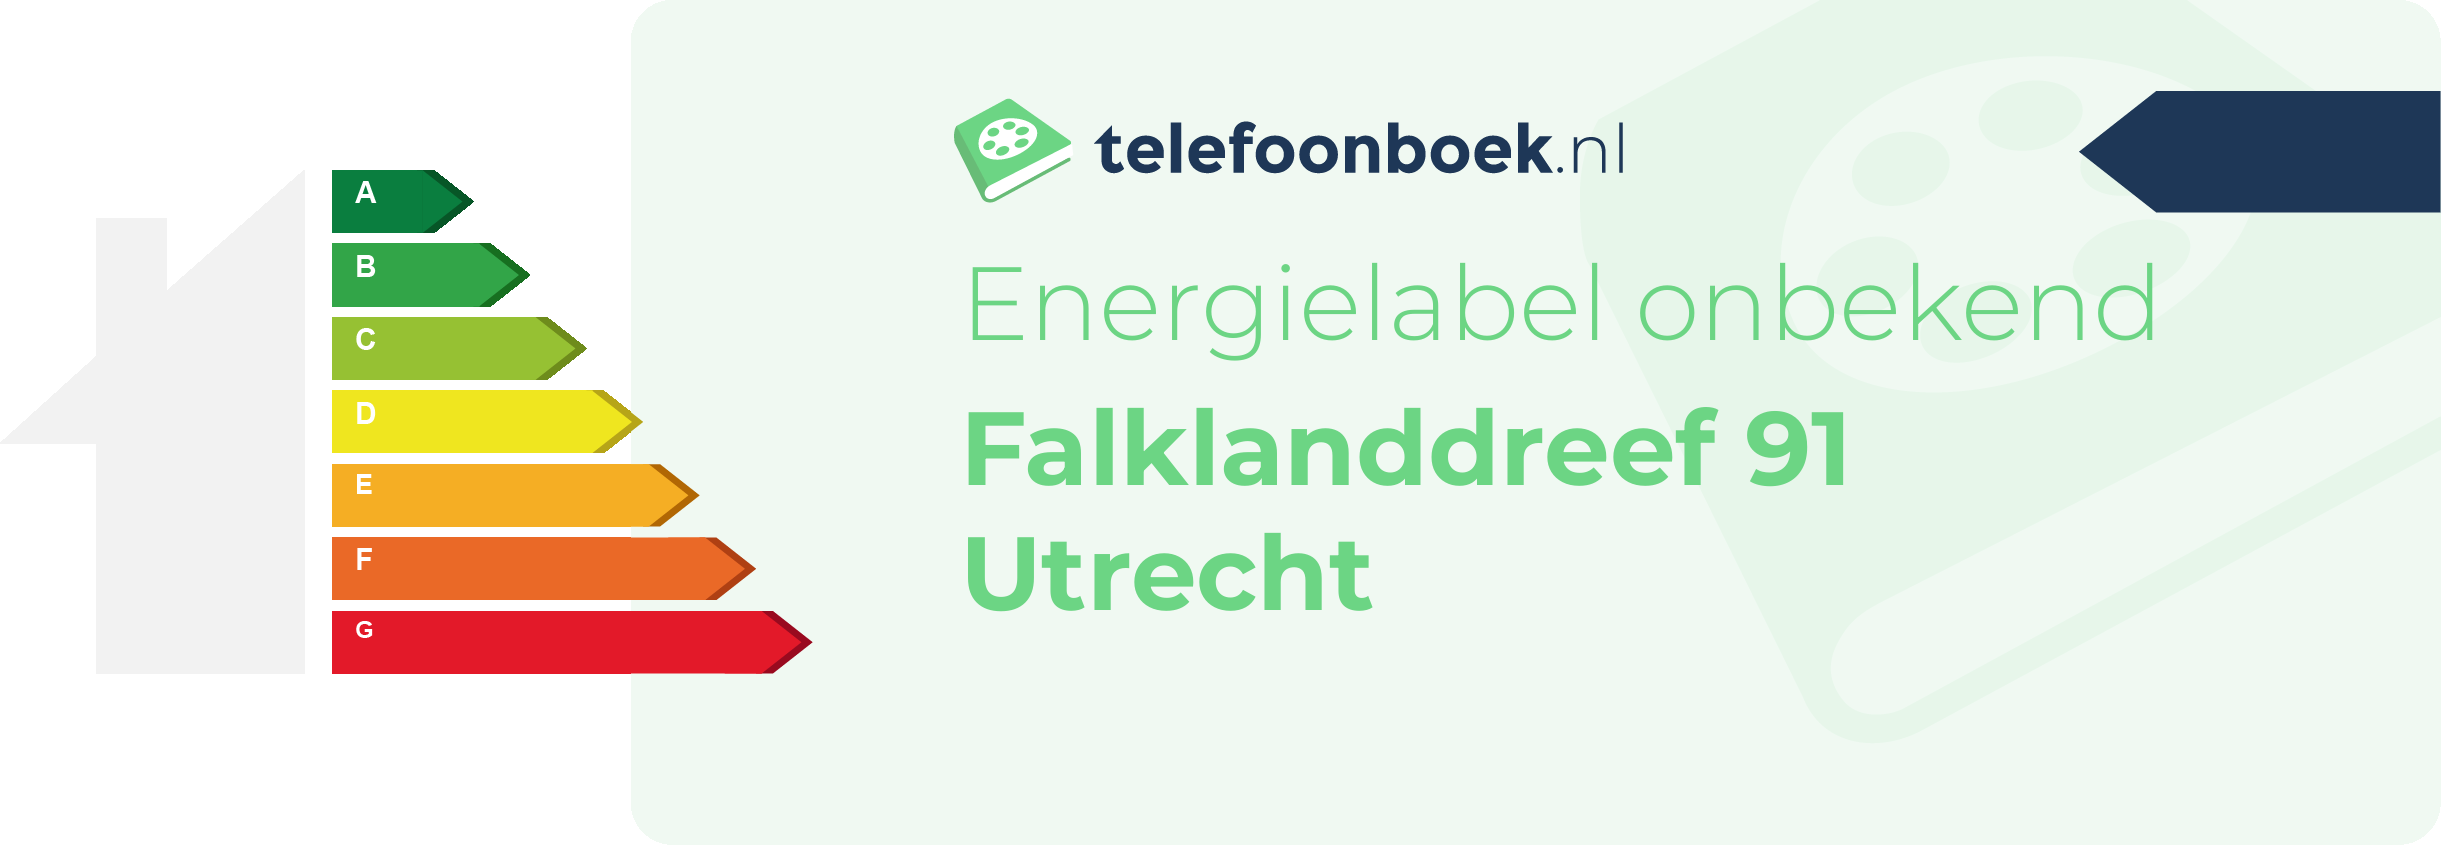 Energielabel Falklanddreef 91 Utrecht